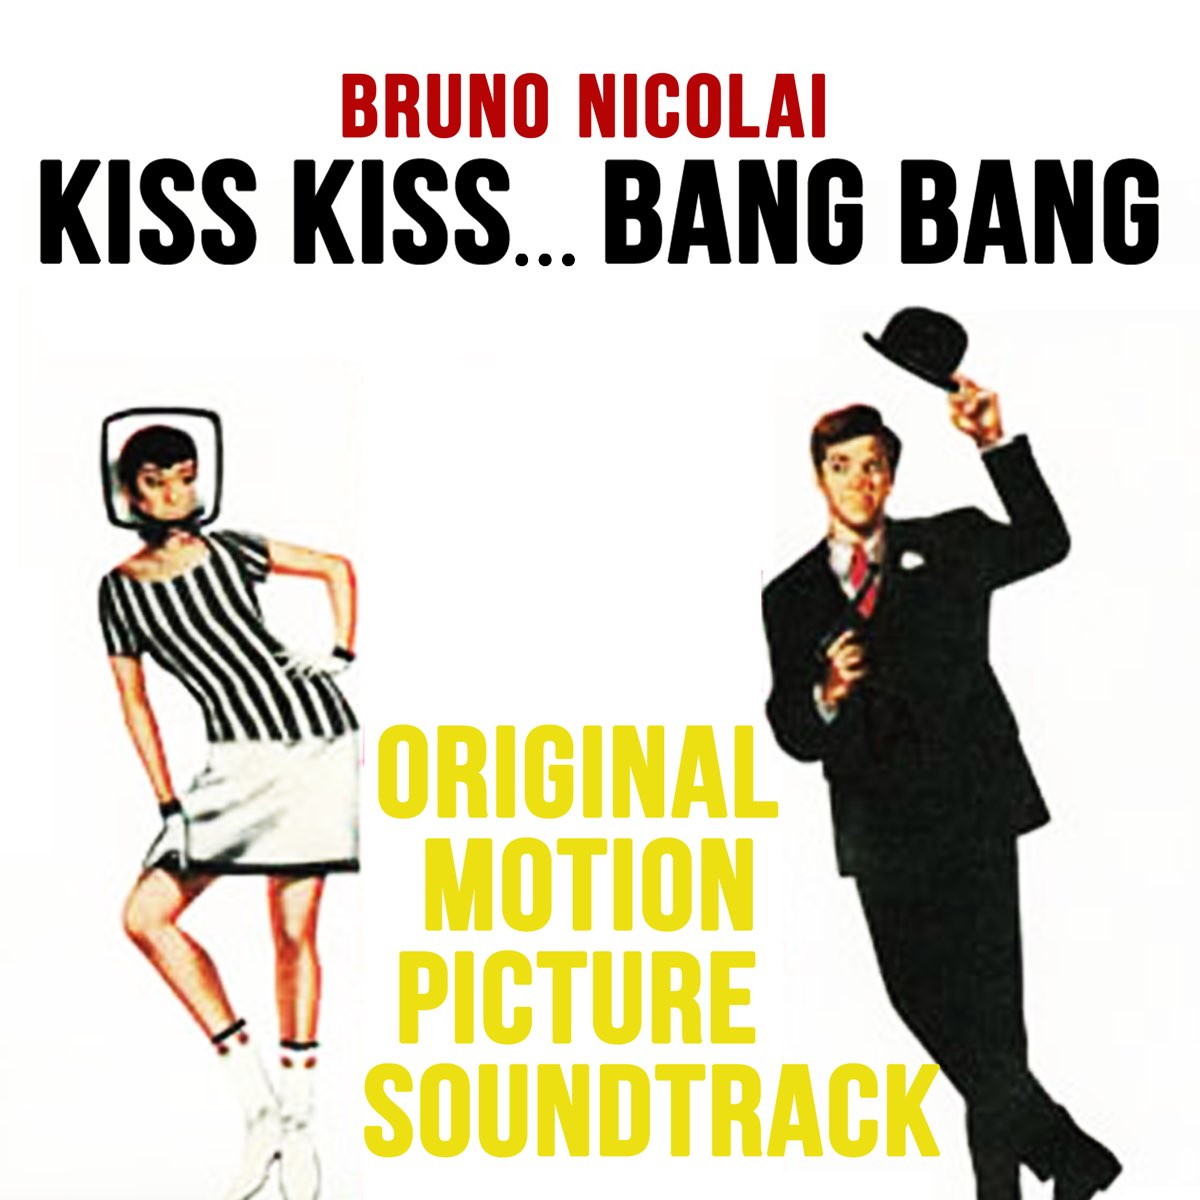 Kiss Kiss Bang Bang (Original Motion Picture Soundtrack) by Bruno Nicolai  on Apple Music